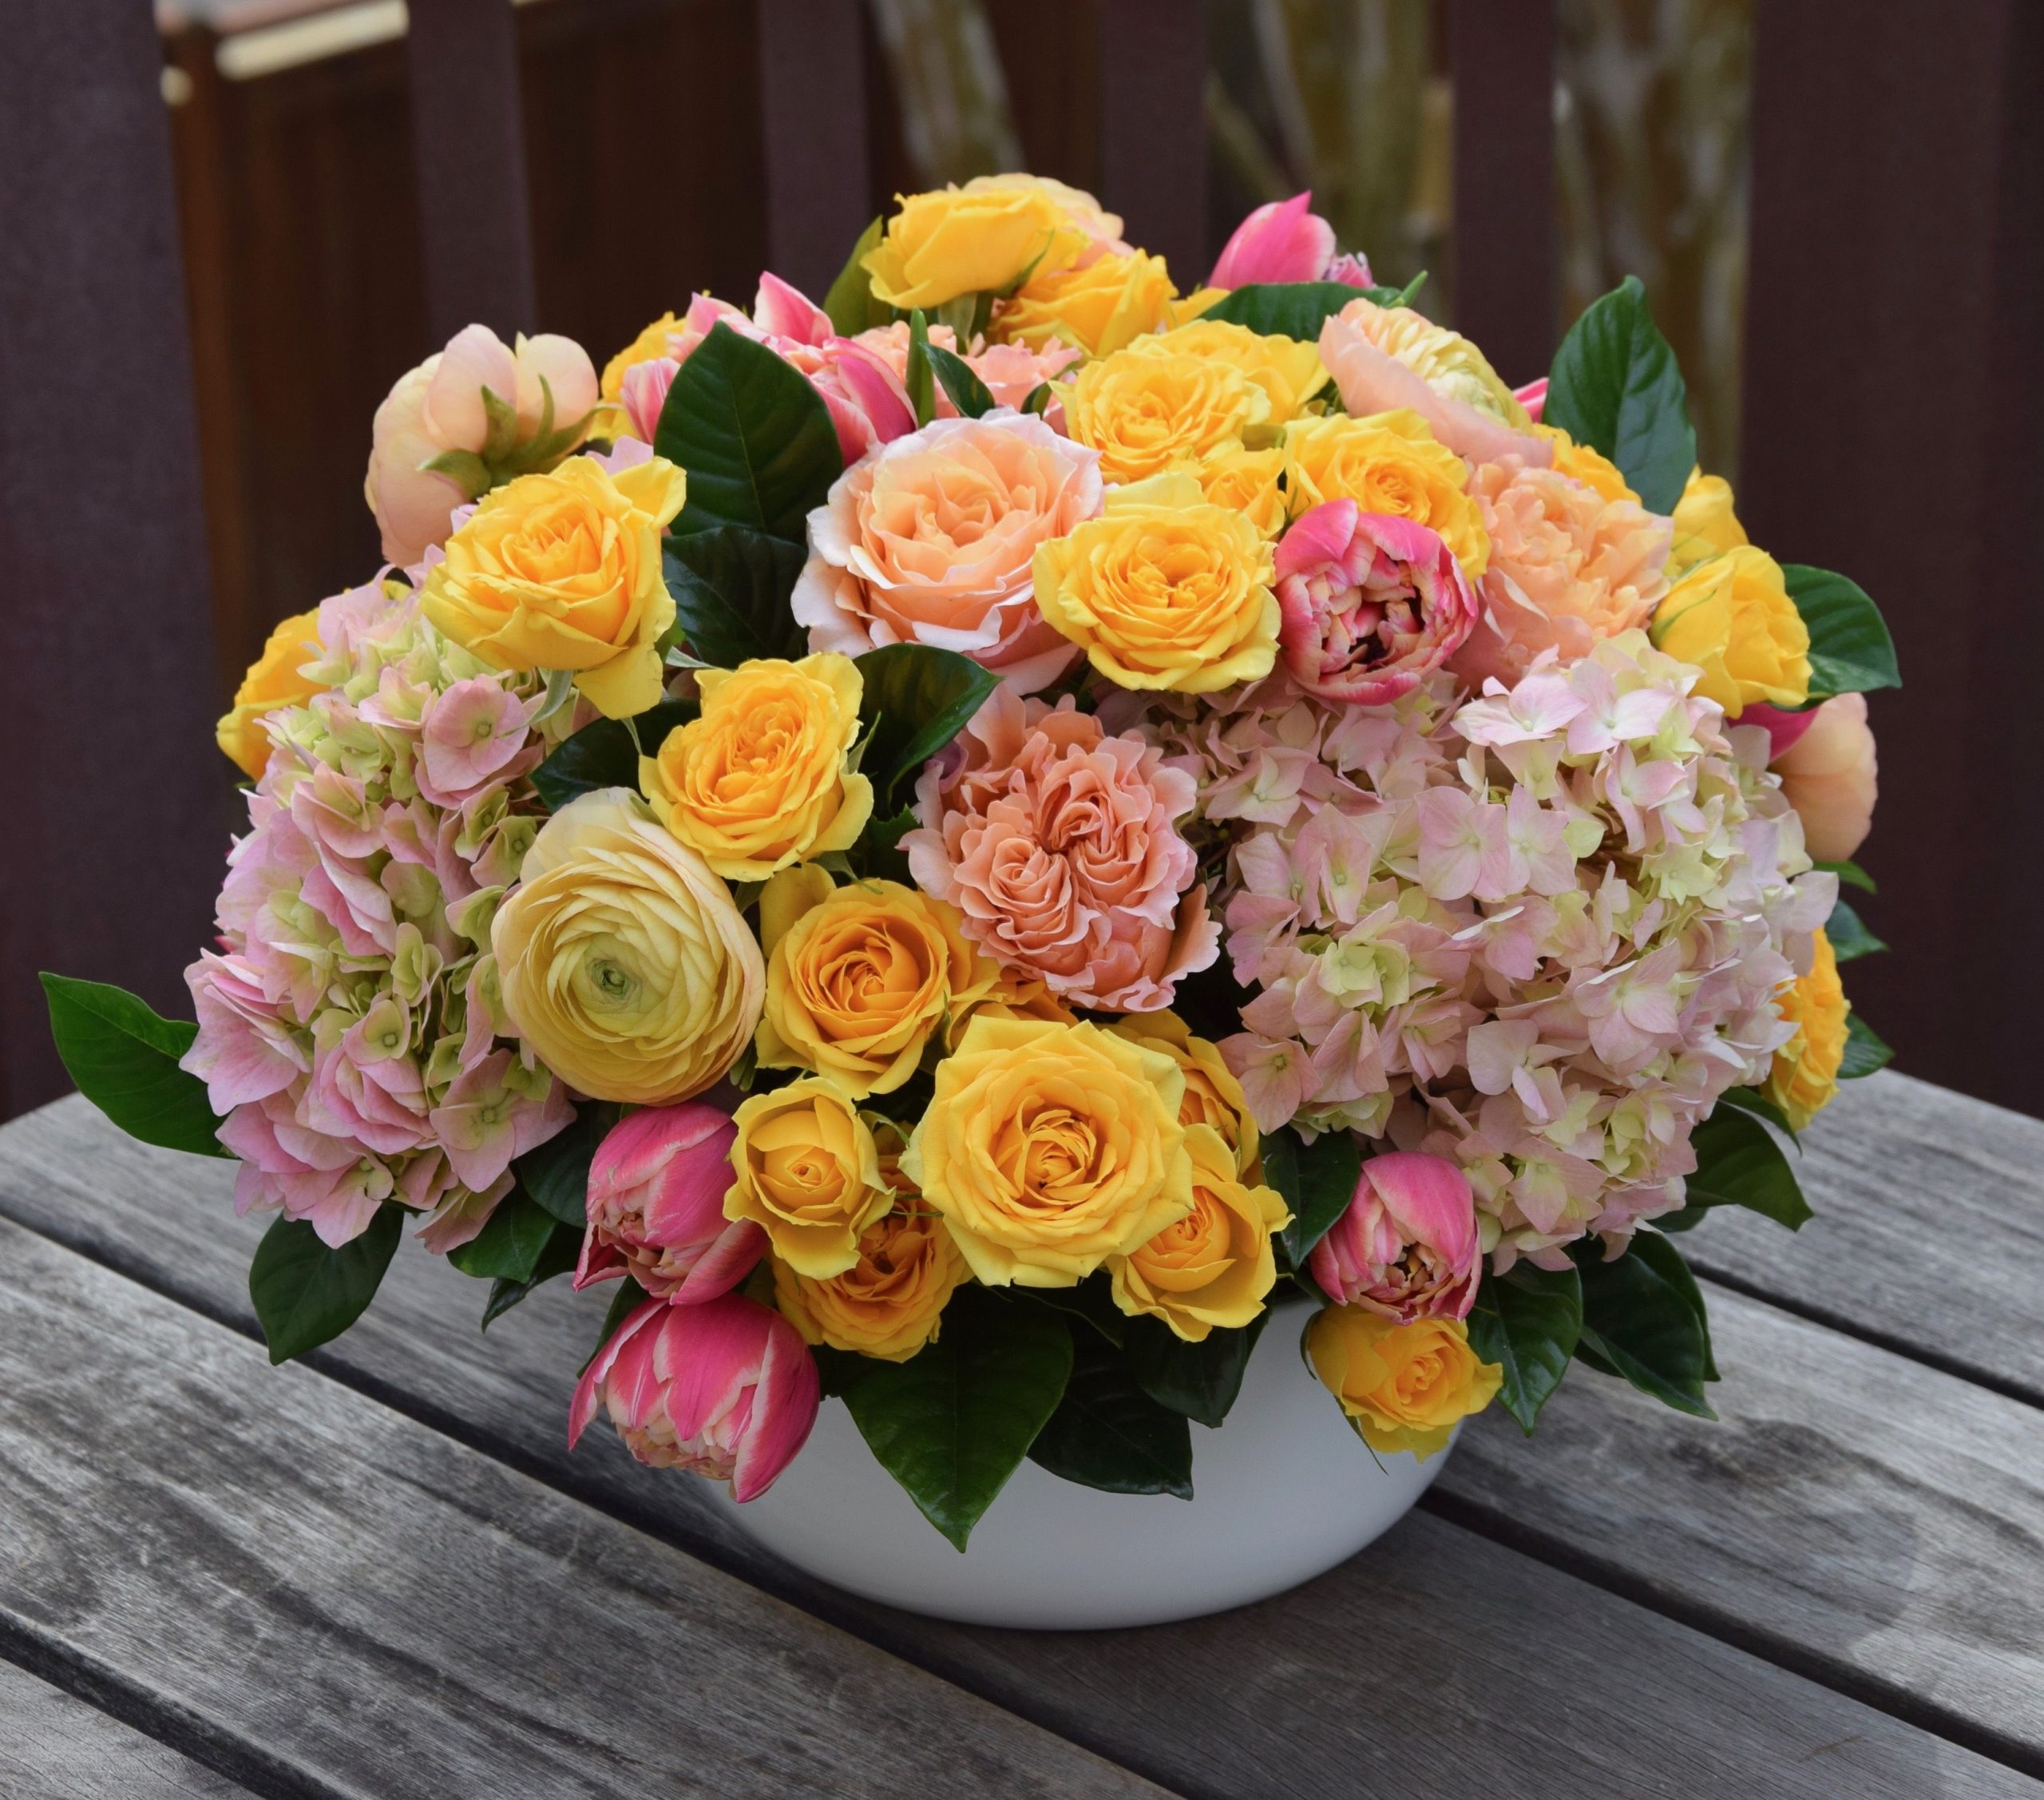 Benefits of Anniversary Flower Bouquet